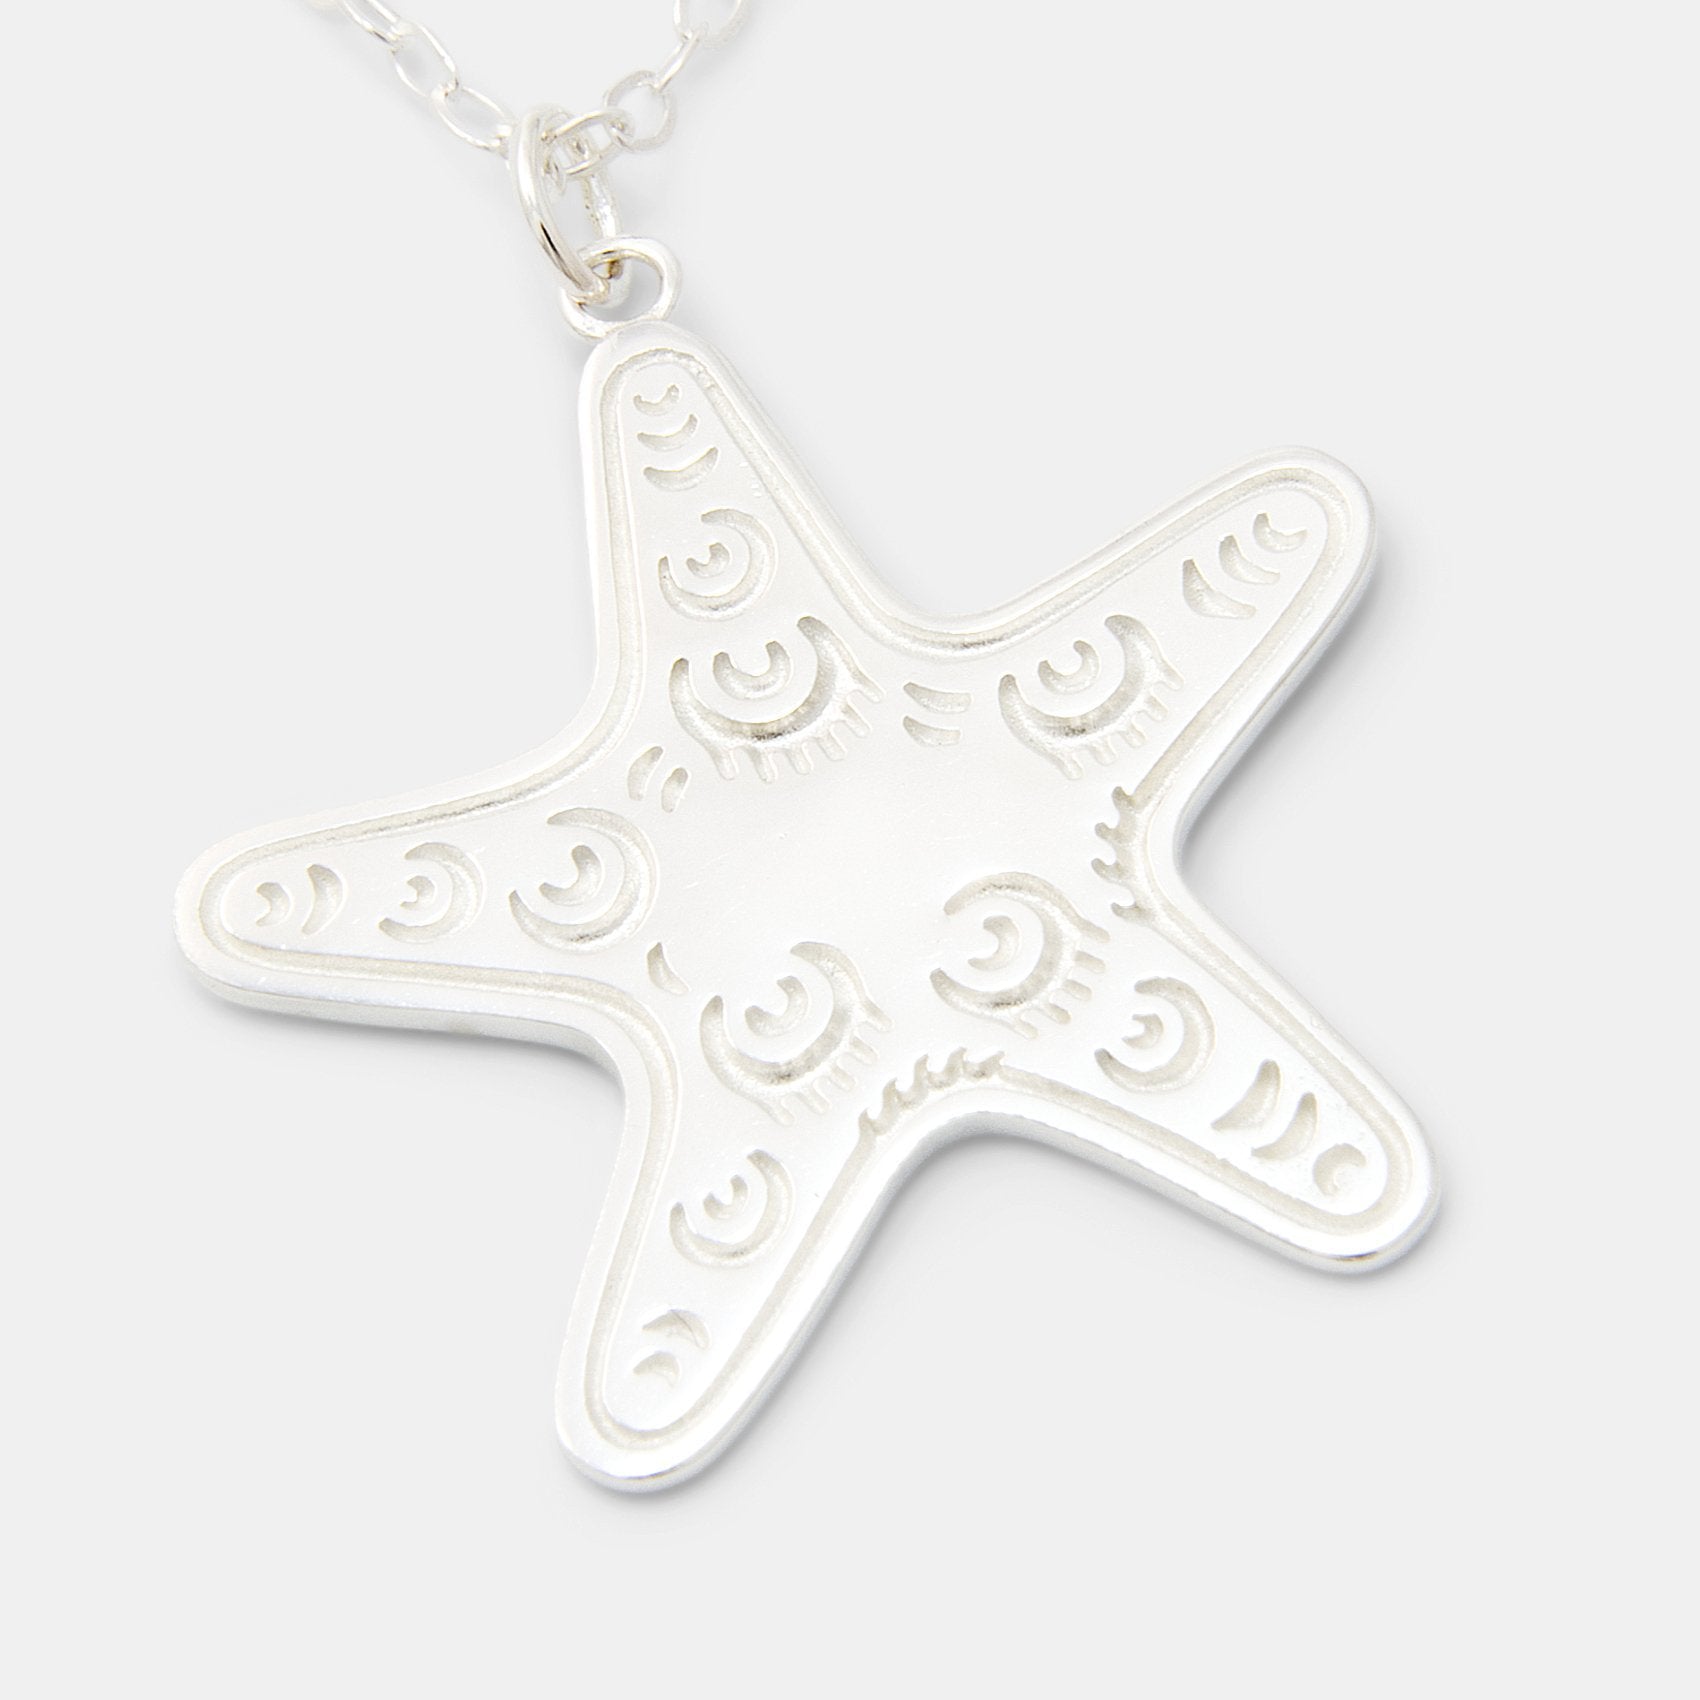 Starfish silver pendant necklace - Simone Walsh Jewellery Australia